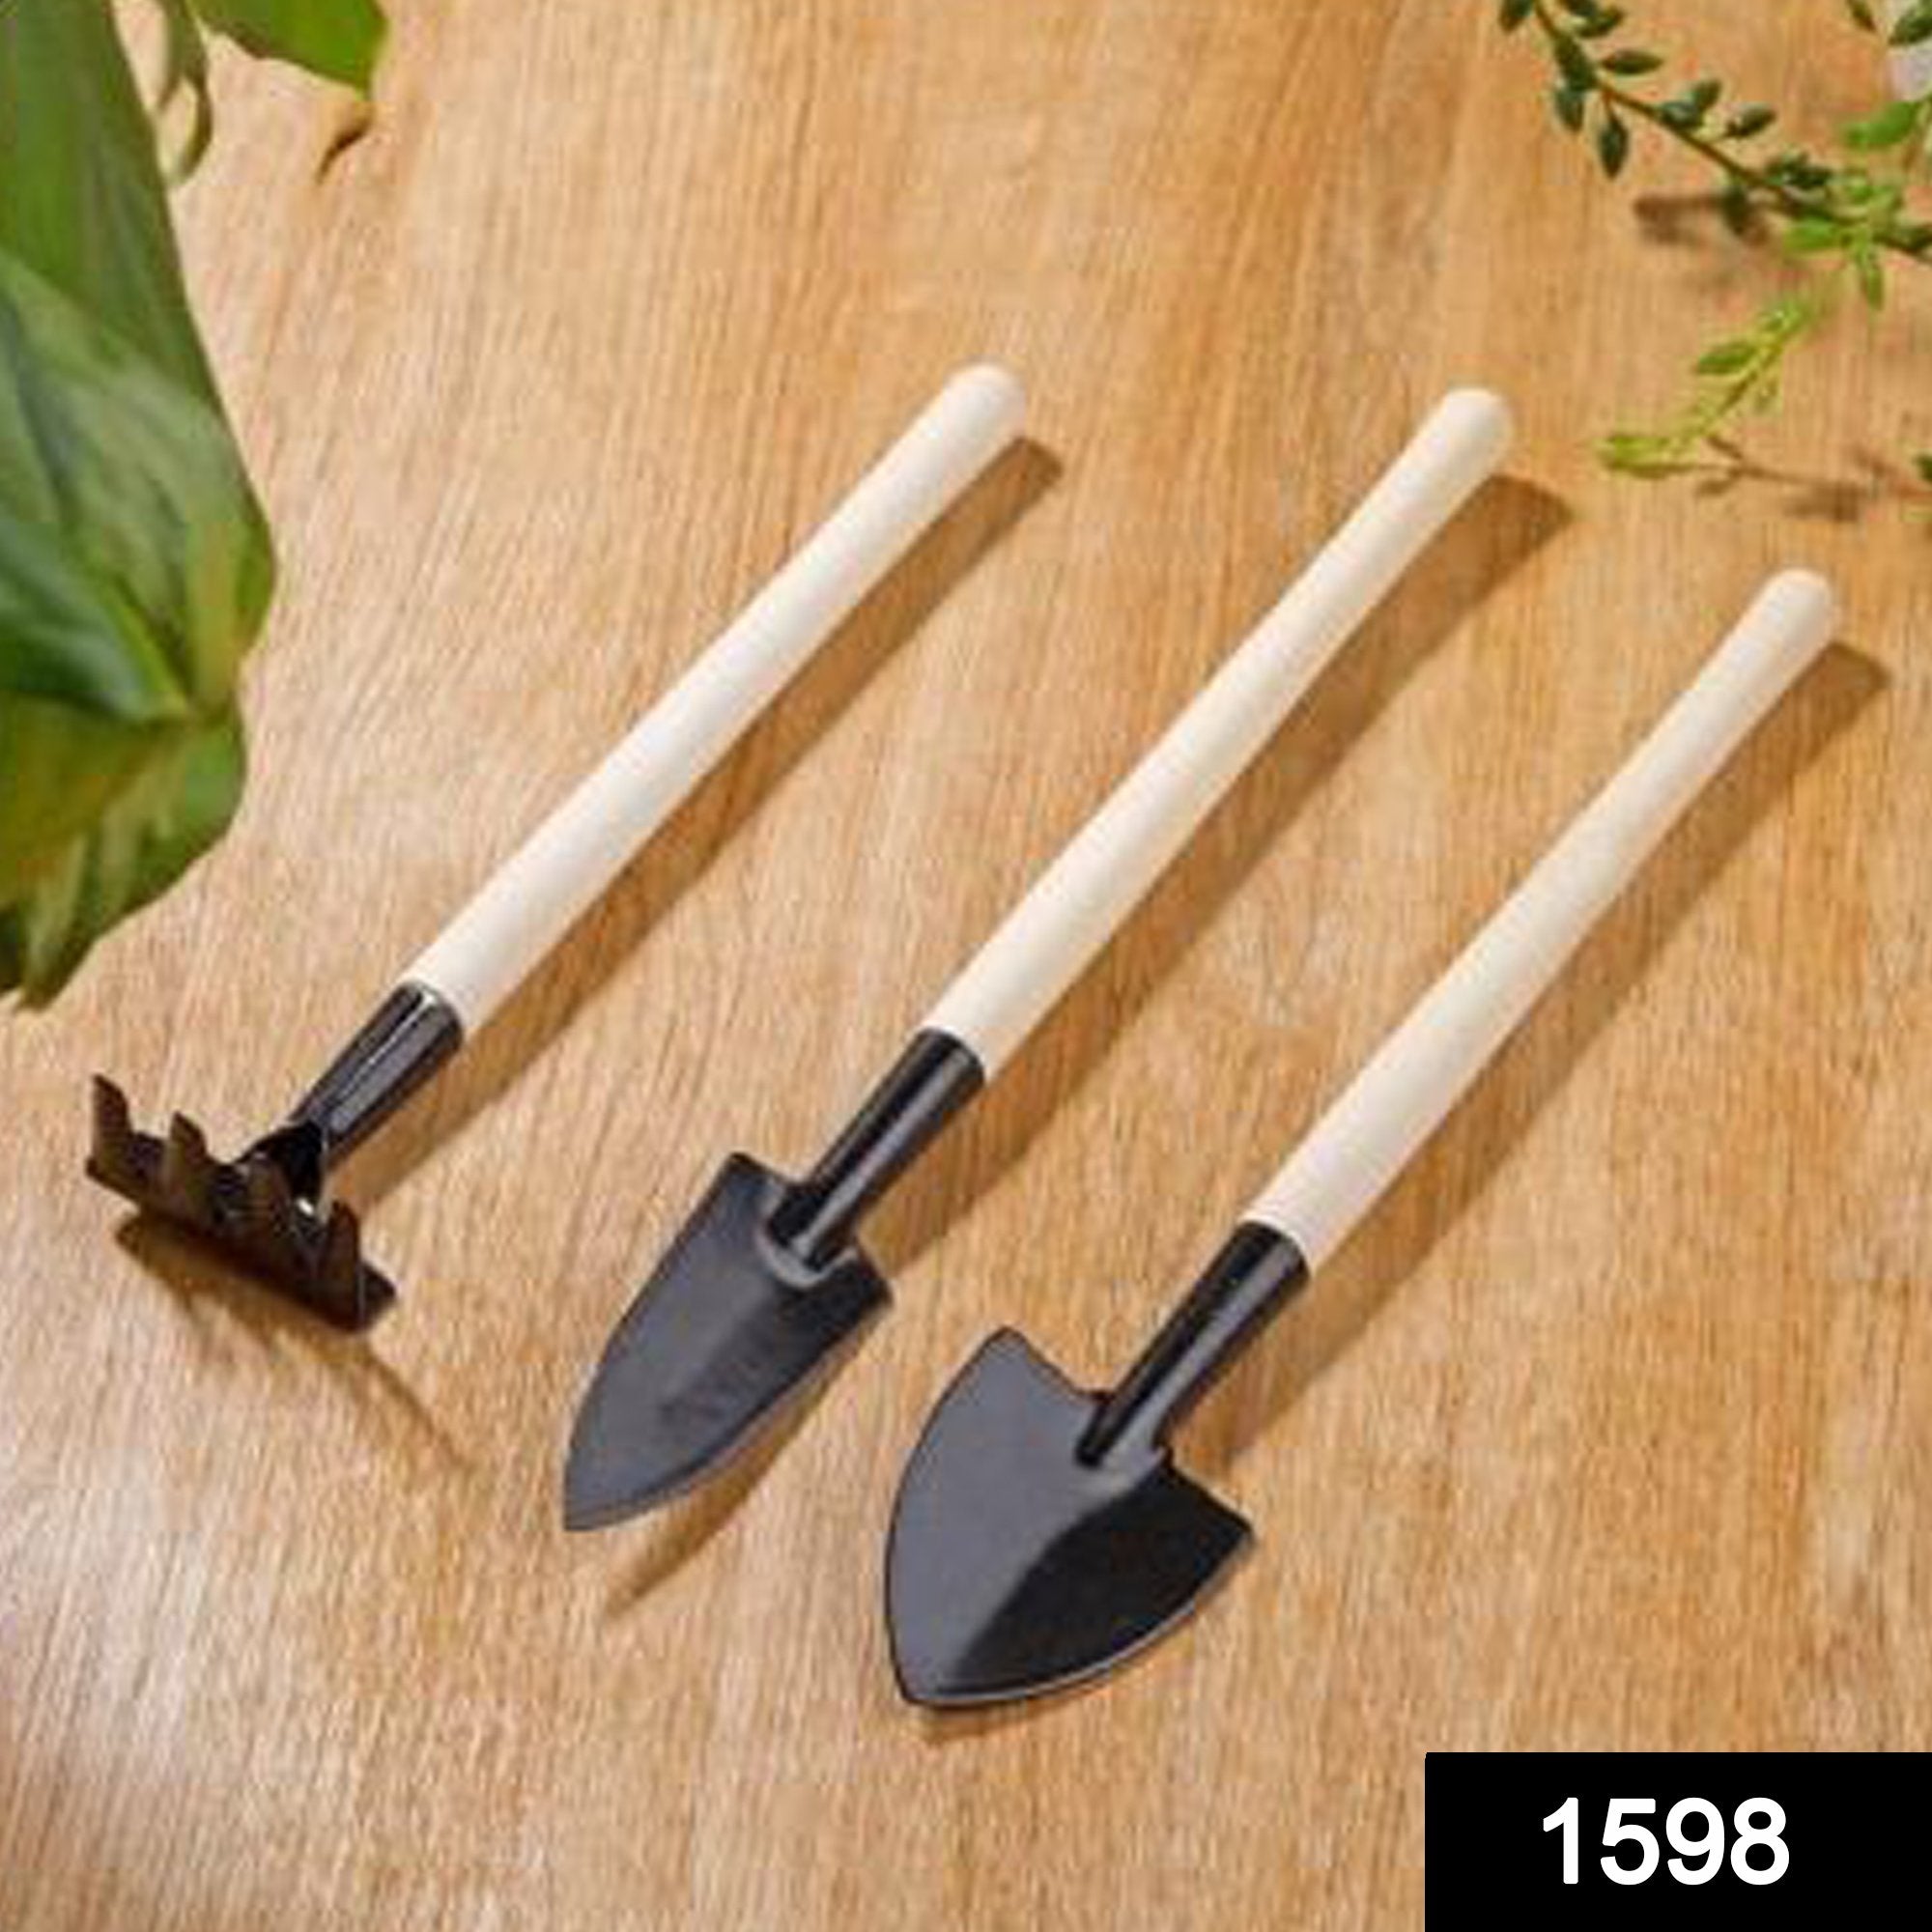 1598 Kid's Garden Tools Set of 3 Pieces (Trowel, Shovel, Rake) - SkyShopy